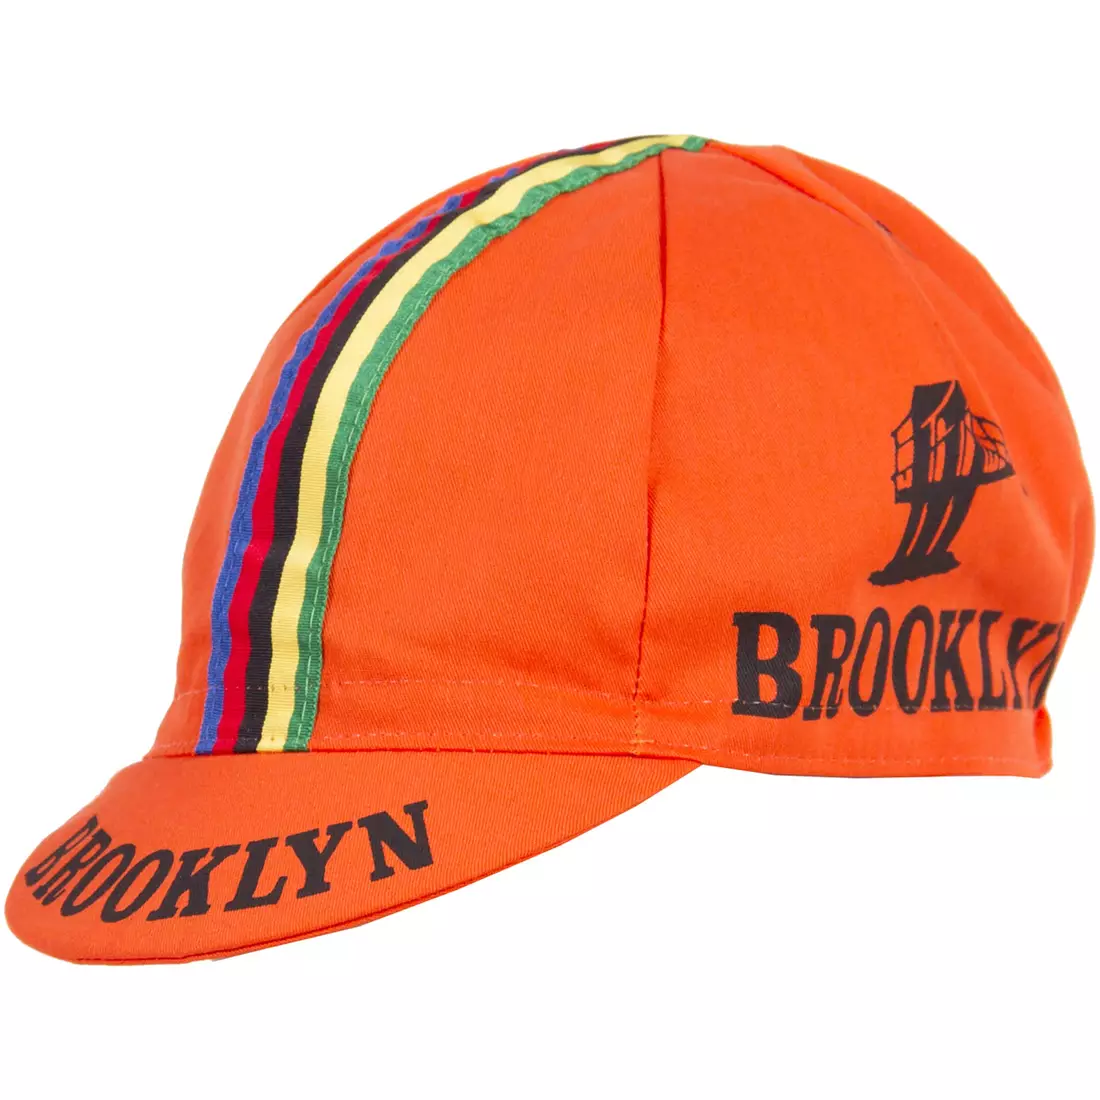 GIORDANA SS18 cycling cap - Brooklyn - Orange w/ Stripe tape GI-S6-COCA-BROK-ORAN one size